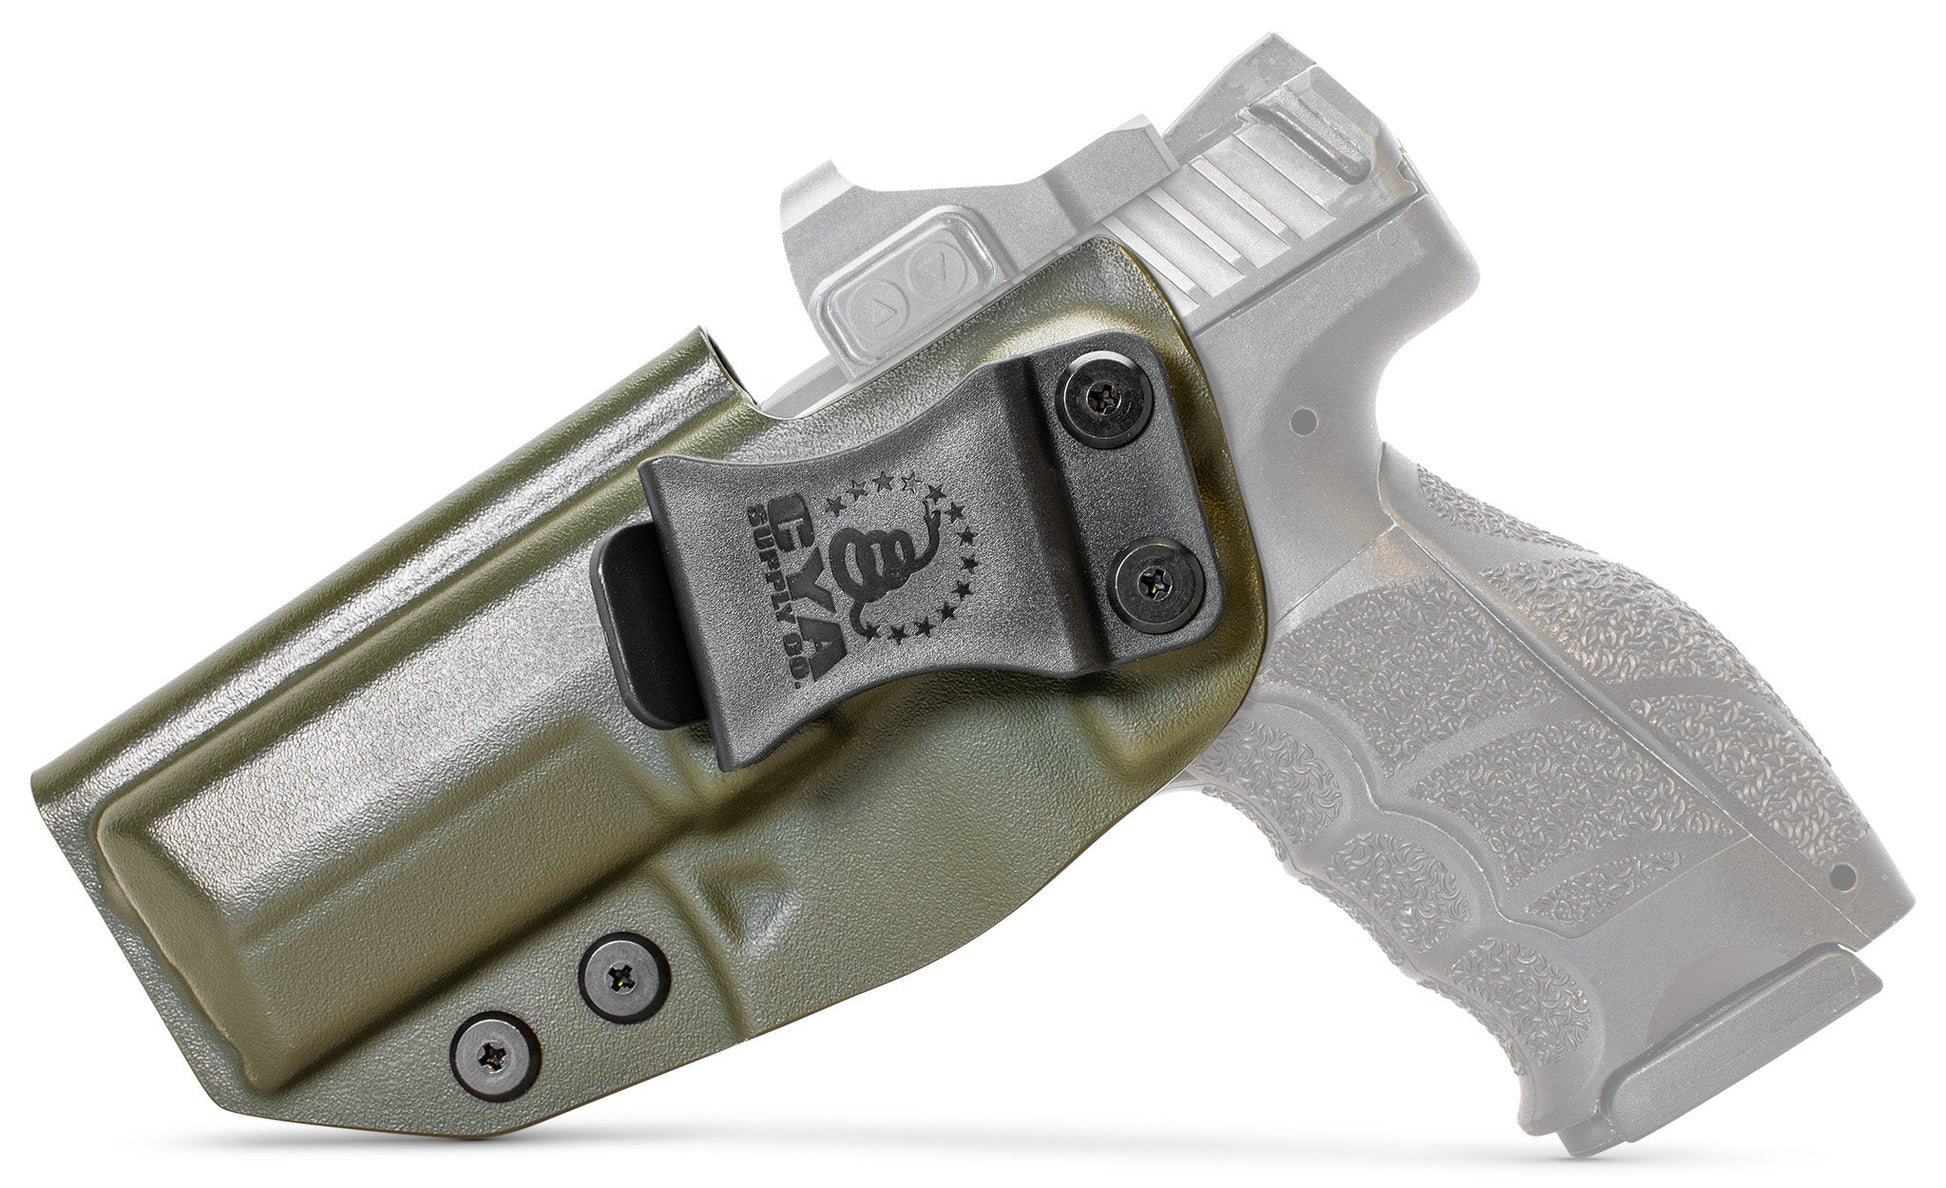 CYA od green Base IWB holster with a black clip on a black hk vp9 handgun